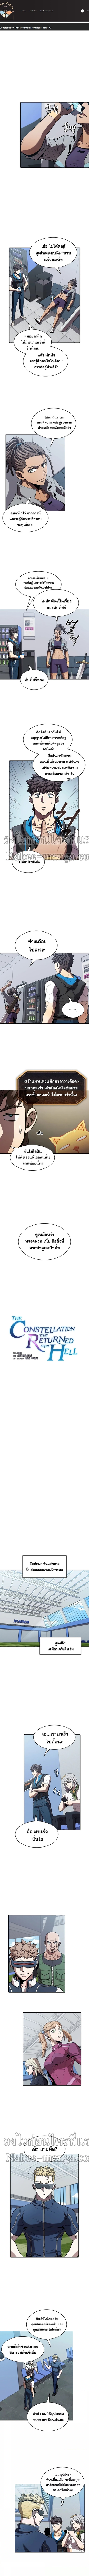 The-Constellation-47_01.jpg